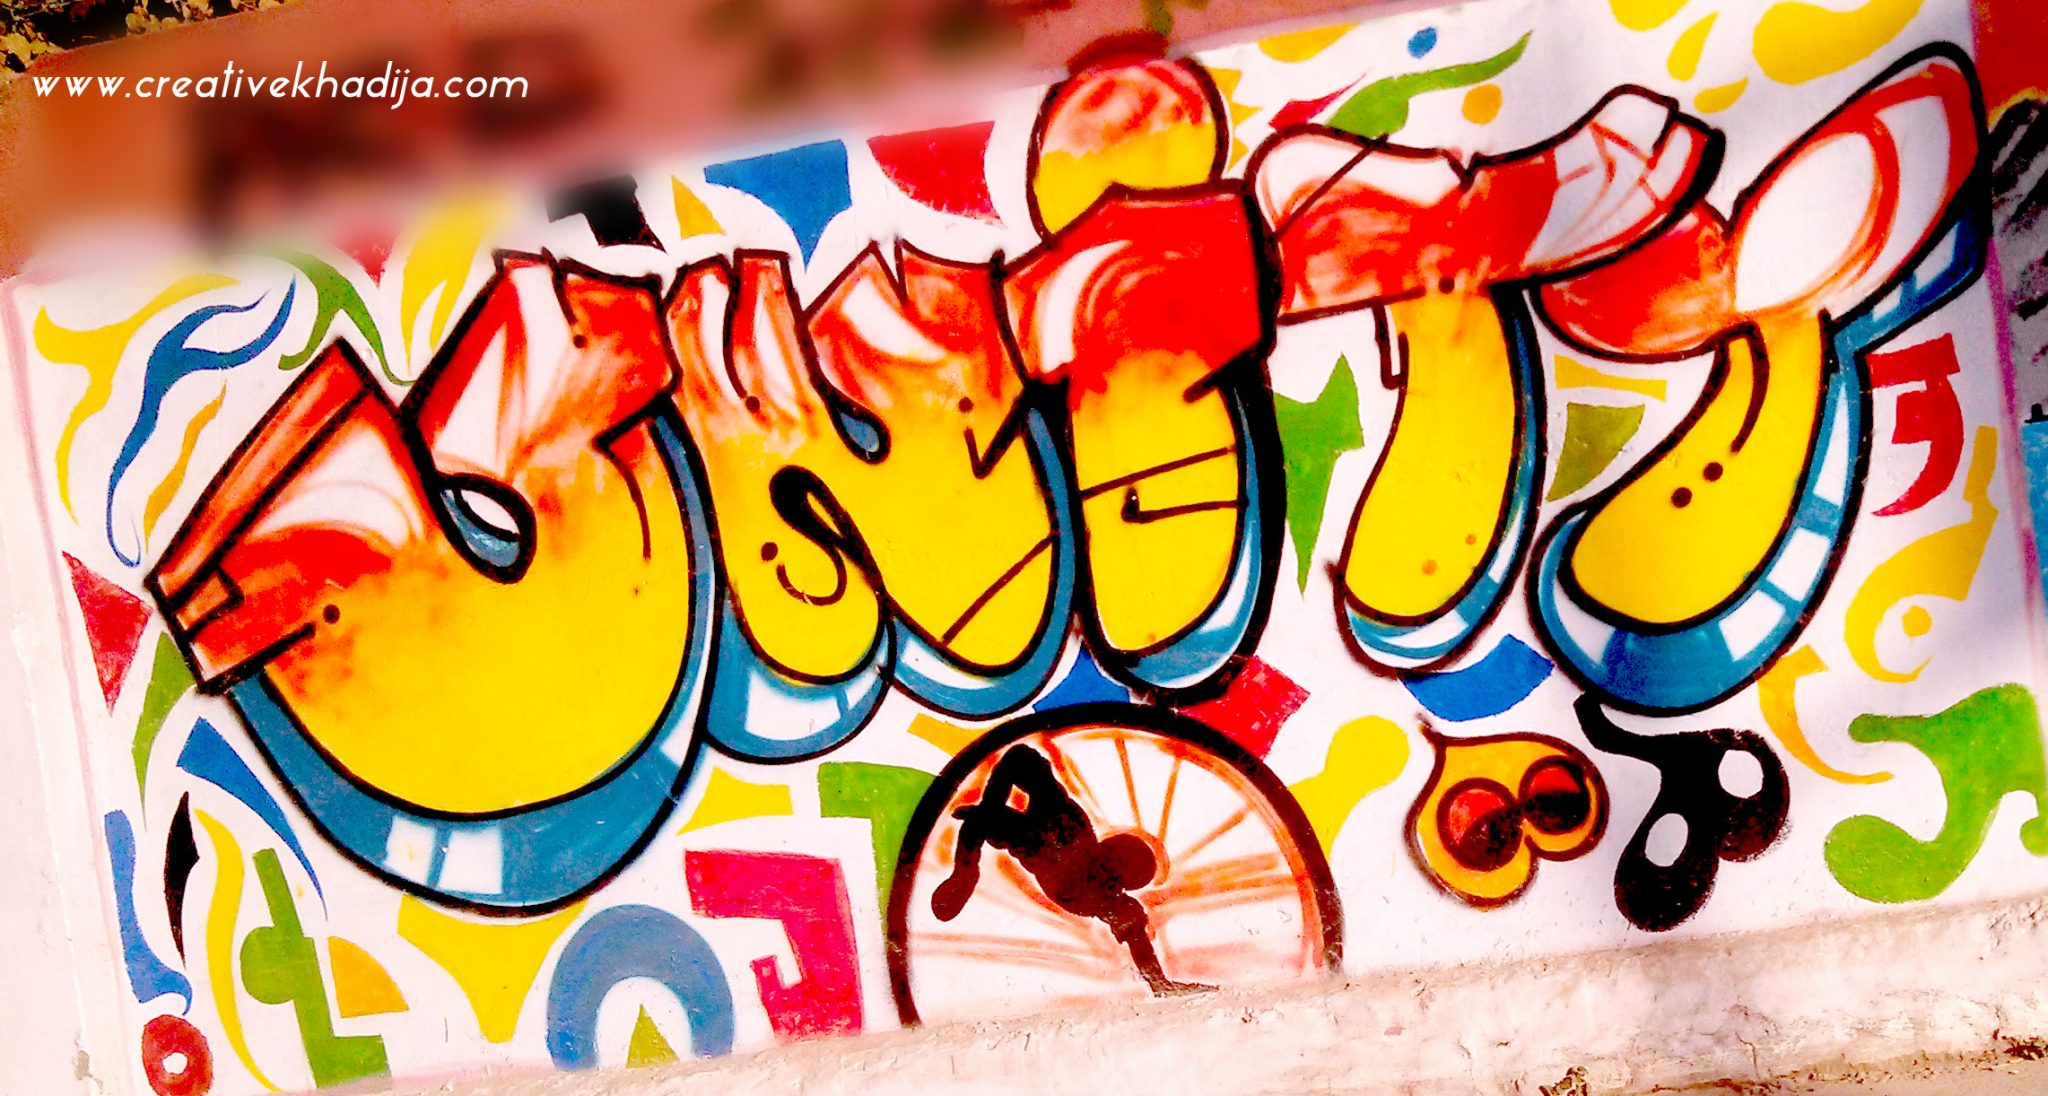 http://creativekhadija.com/wp-content/uploads/2014/12/pakistan-street-art-graffiti-wall-painting-.jpg